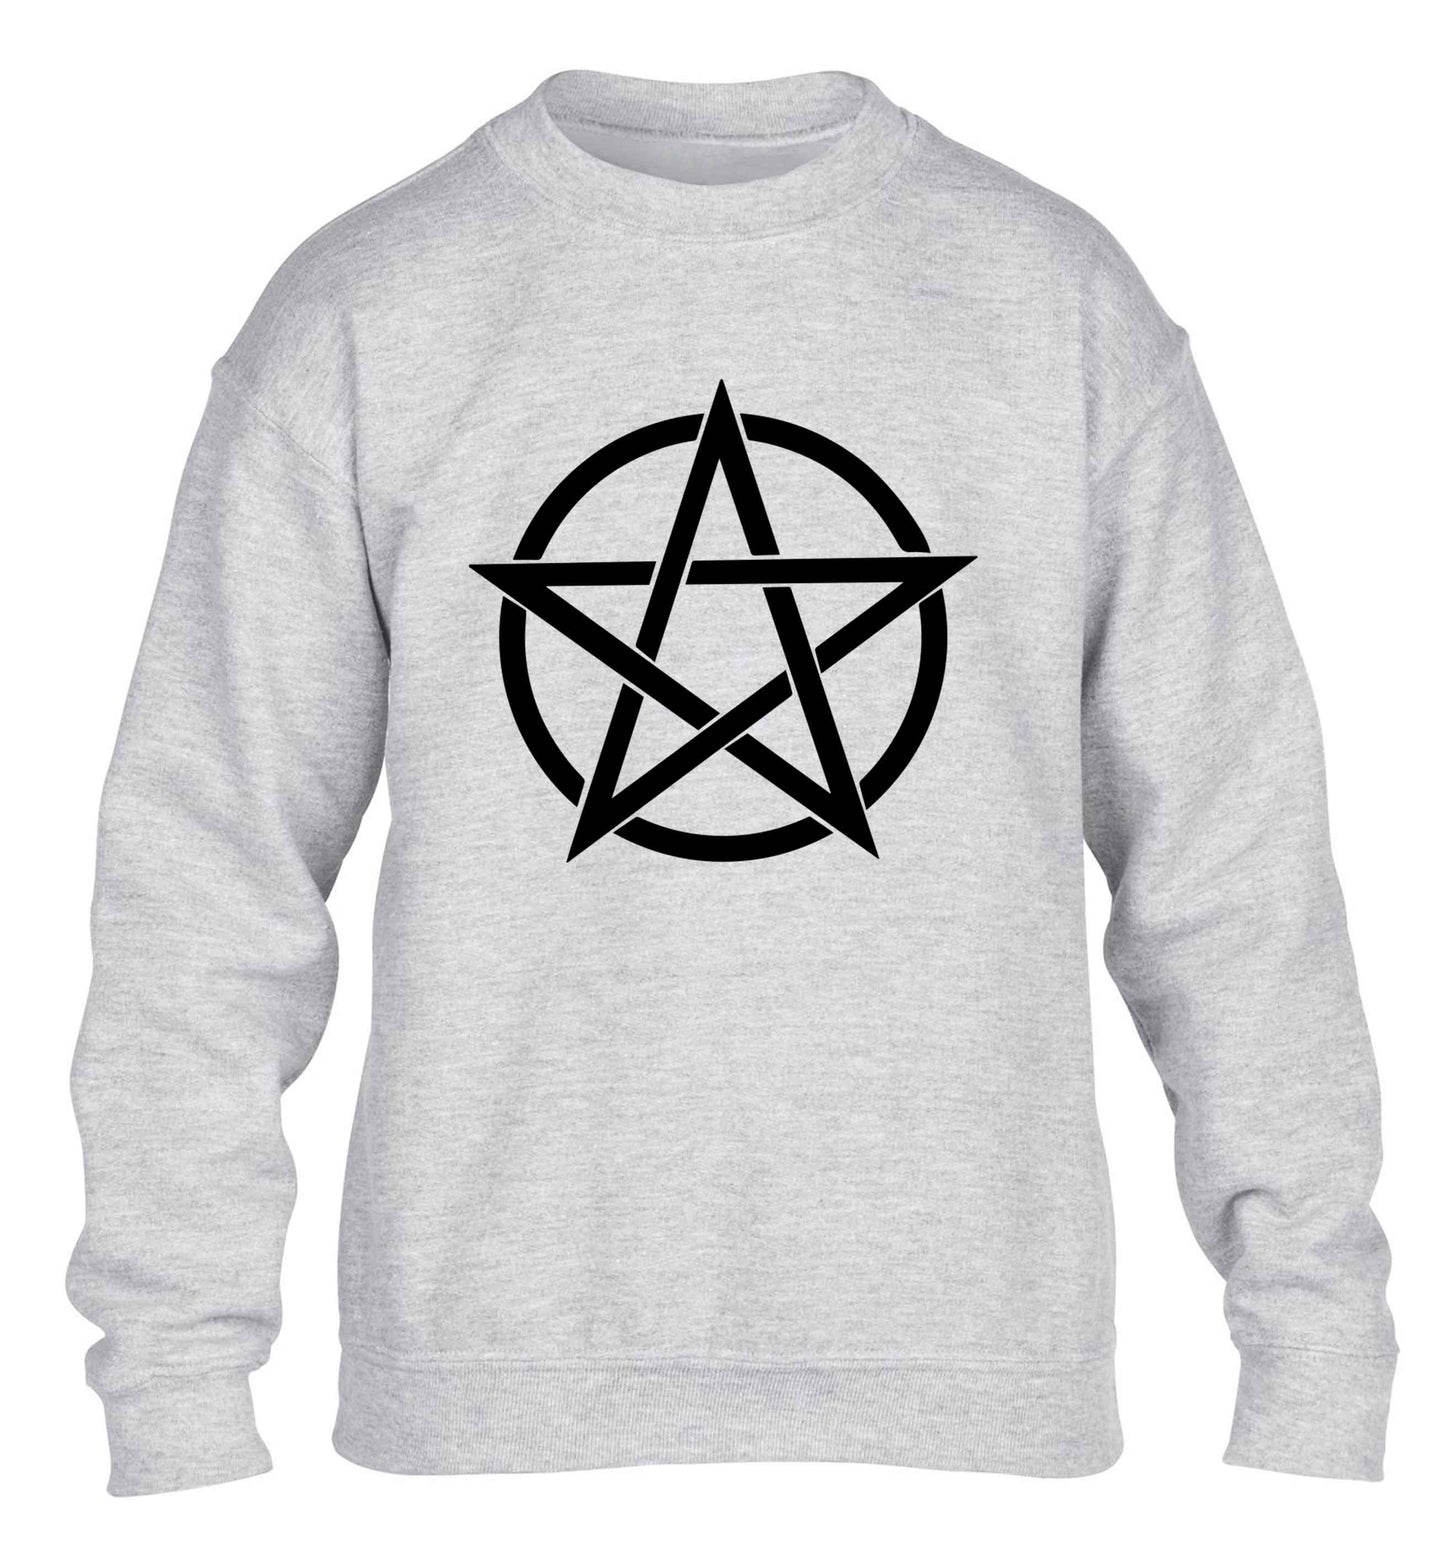 Pentagram symbol children's grey sweater 12-13 Years